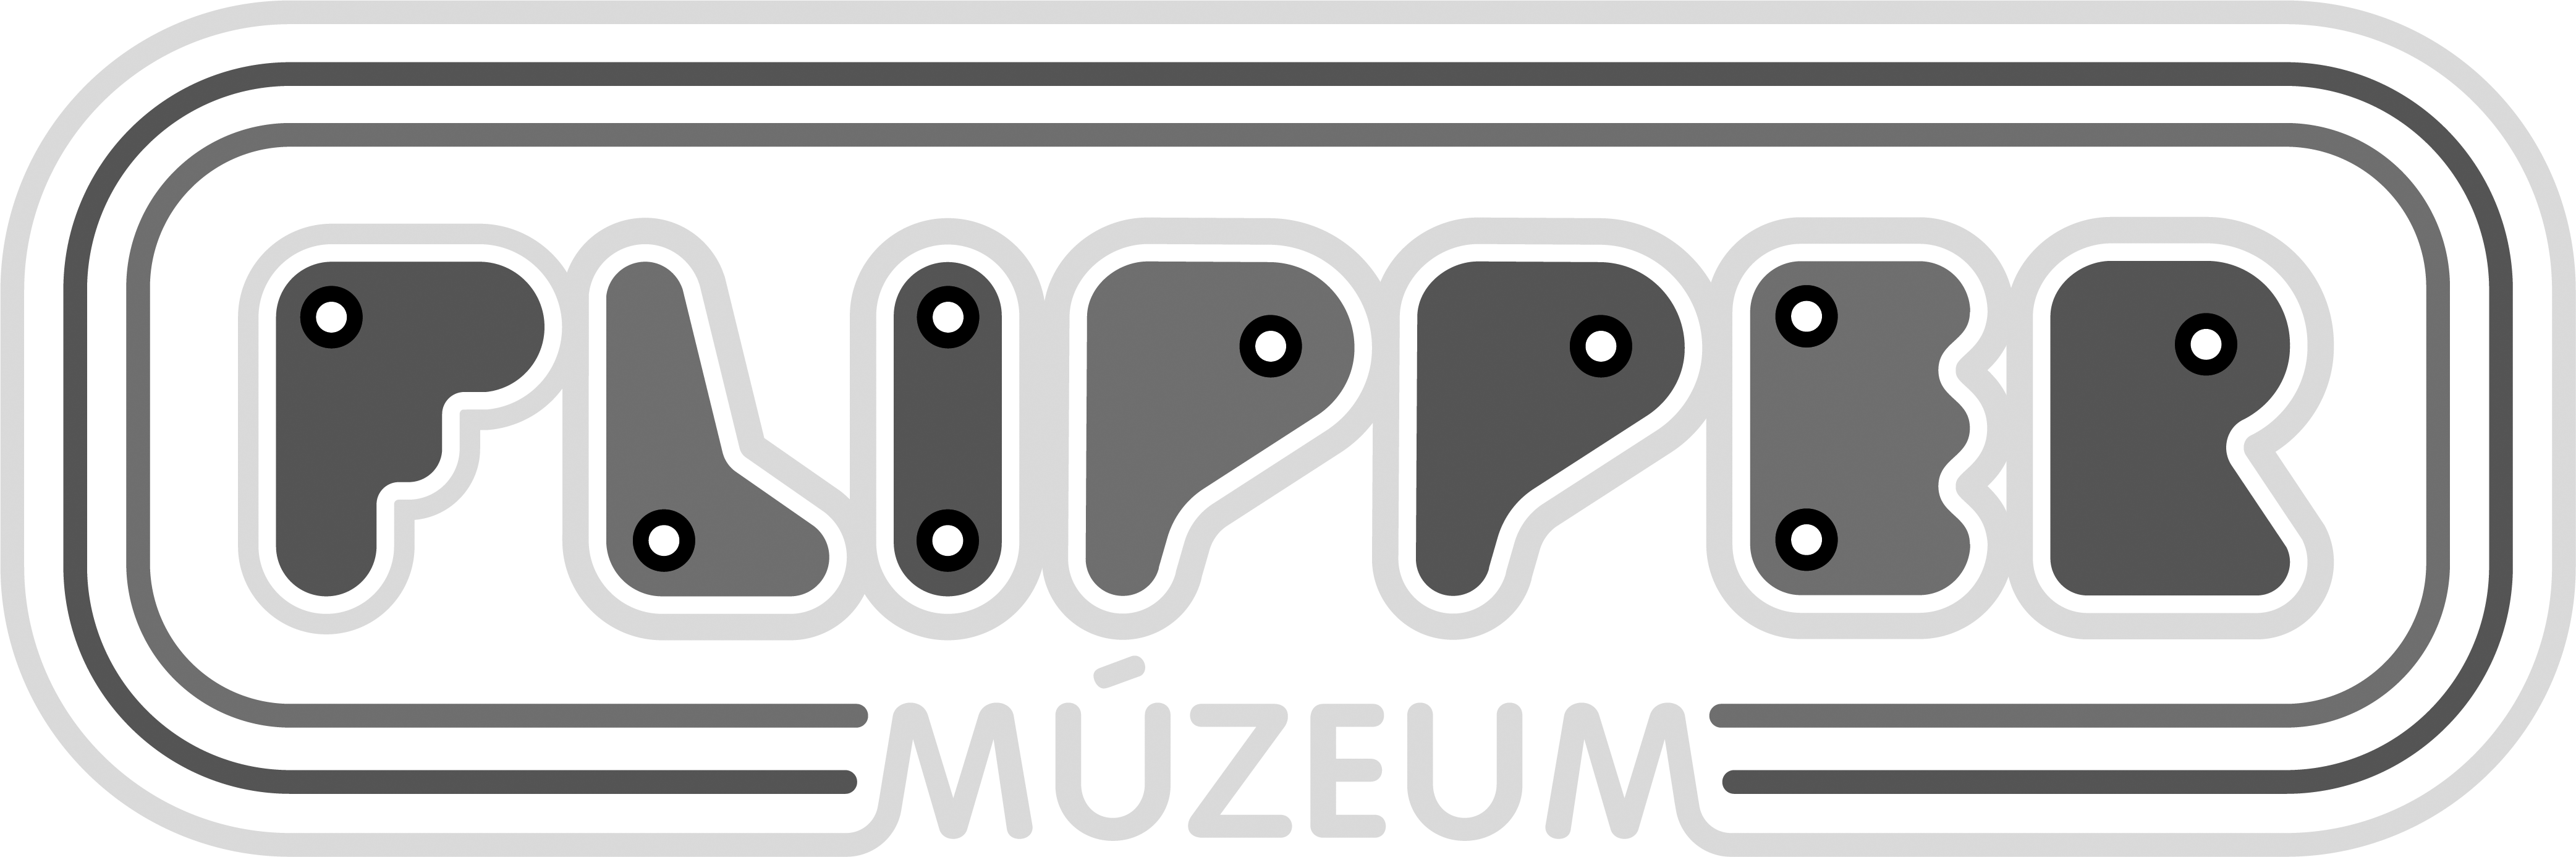 flipper-muzeum-logo-2020-05-14-greyscale